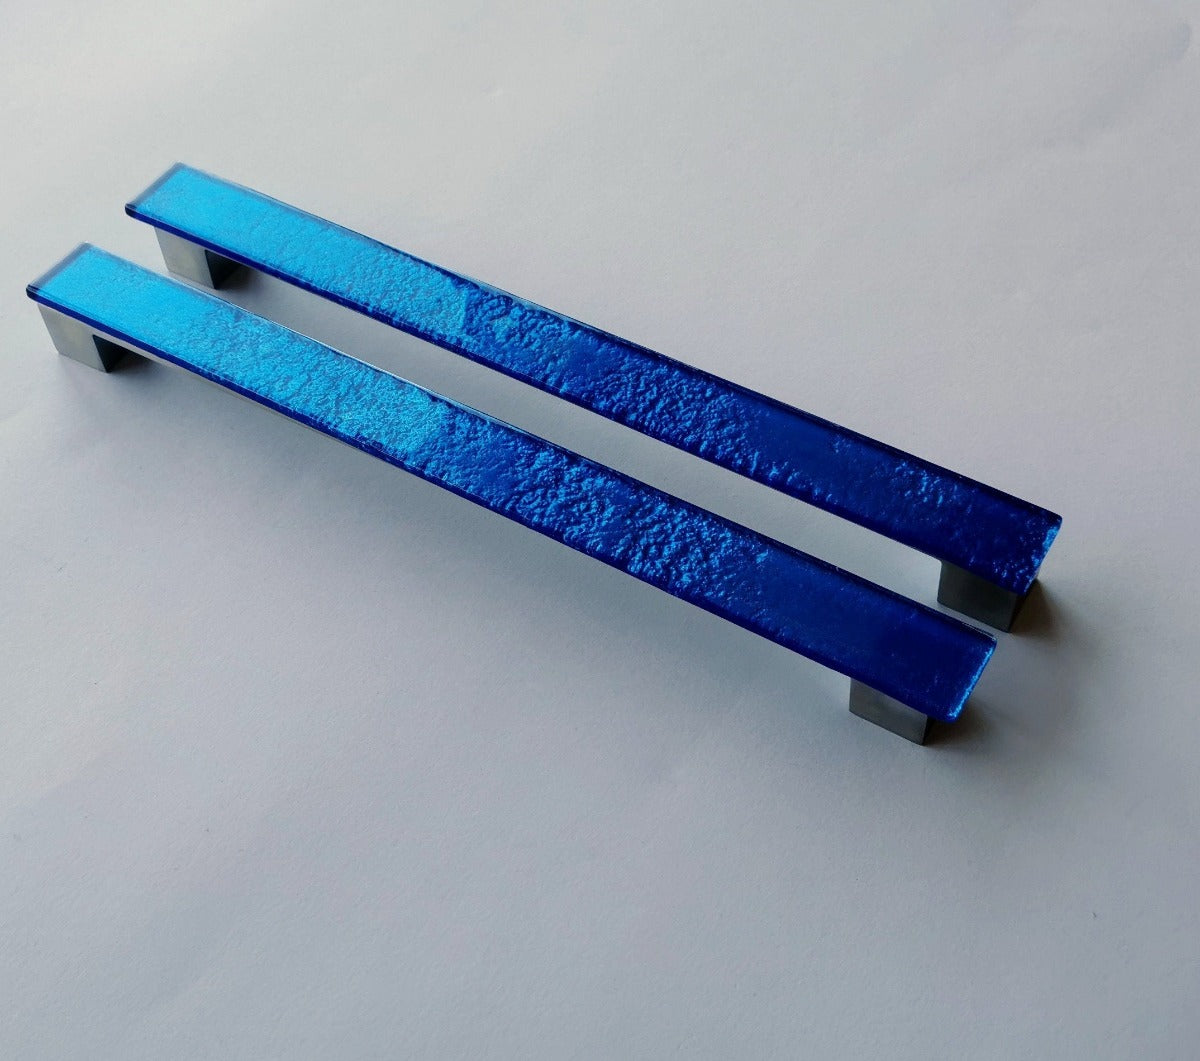 A Set of 2 Large Glass Pulls in Cobalt Blue. Artistic Bright Blue Fridge Glass Pulls - 0021